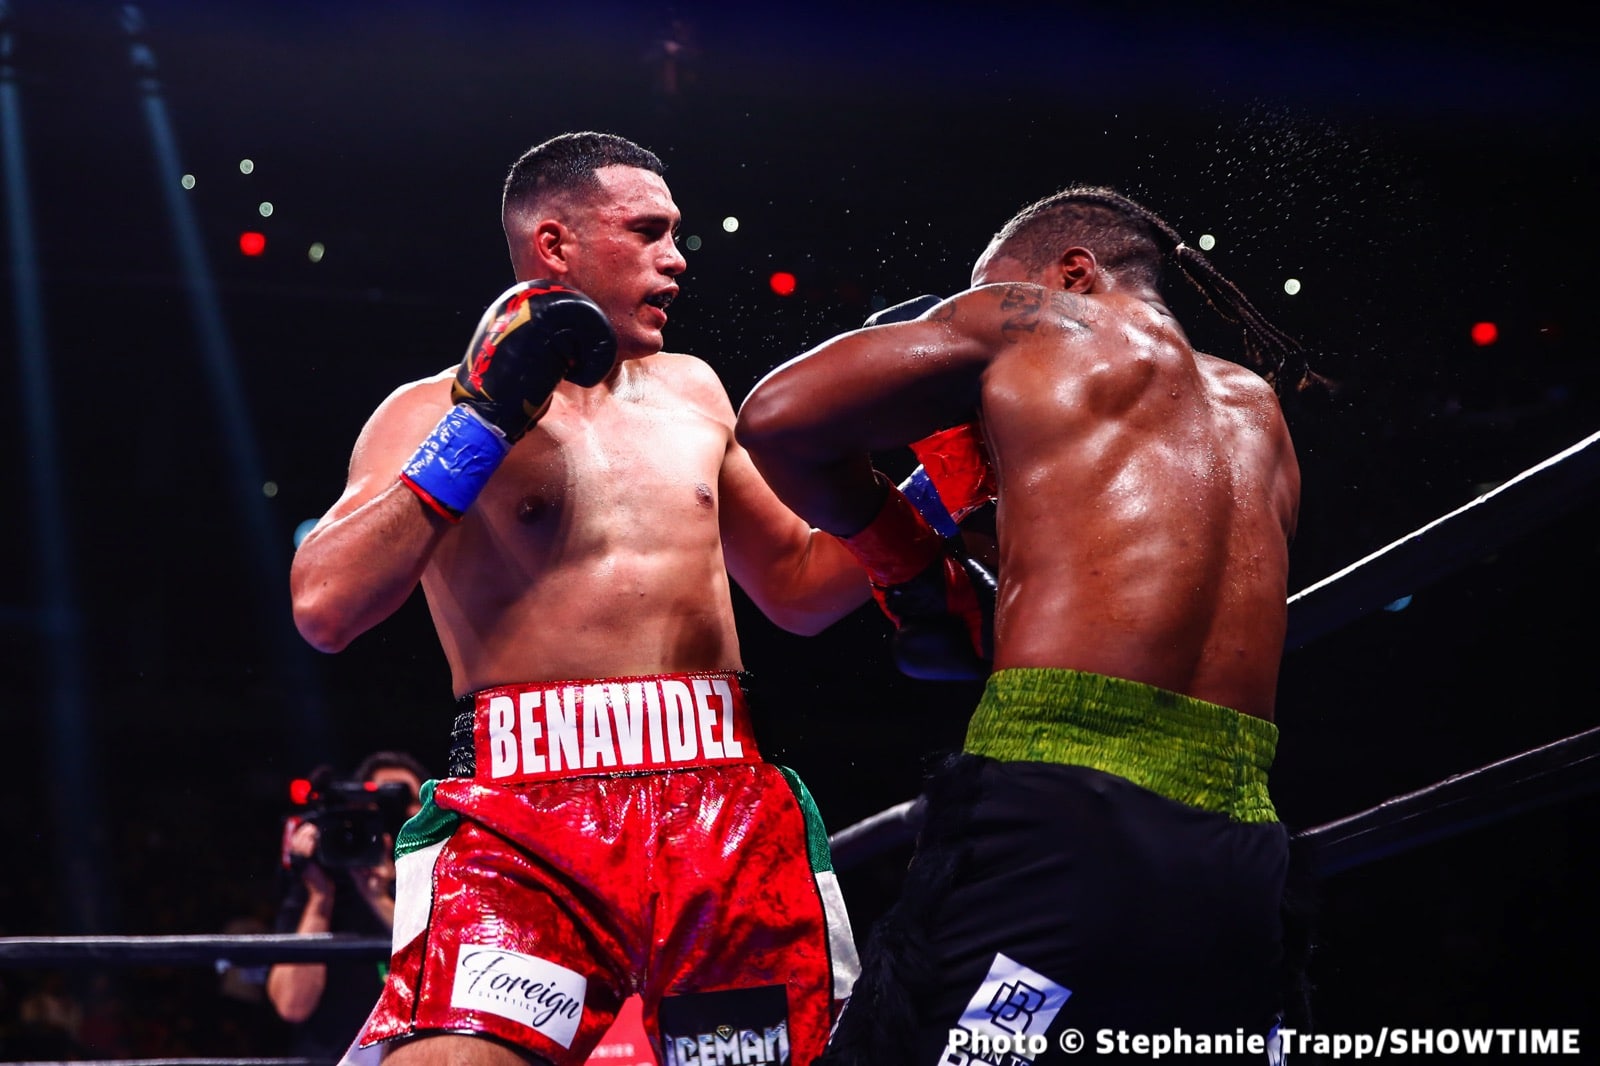 Jose Benavidez Jr. boxing image / photo